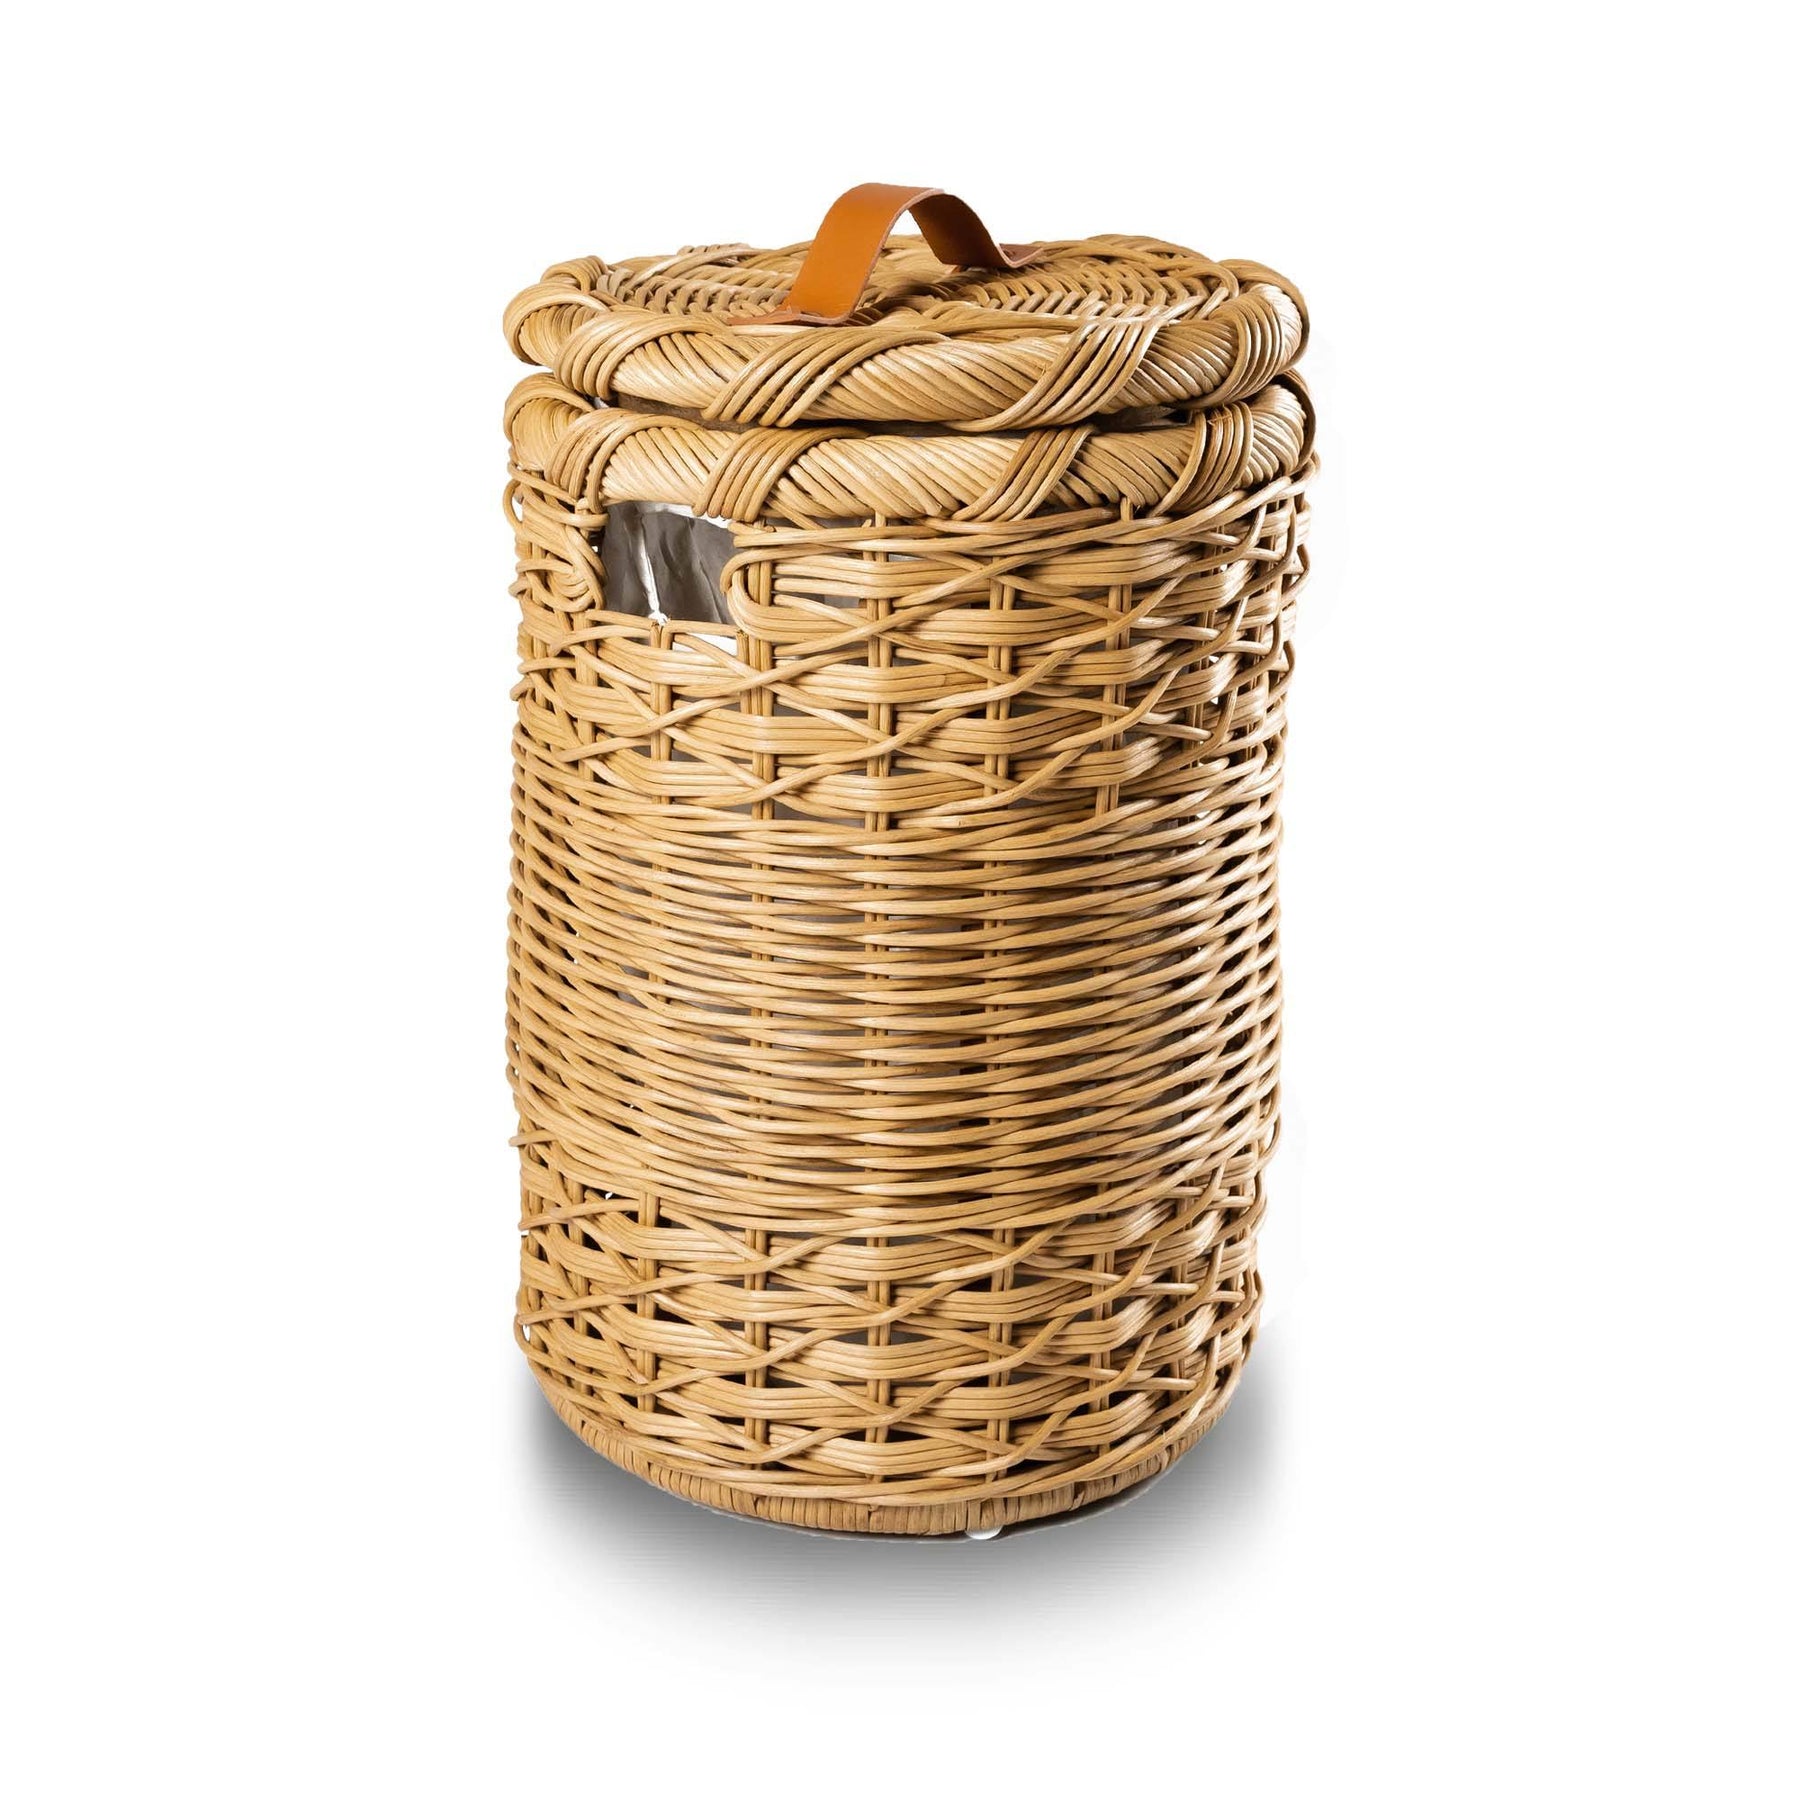 The Basket Lady Small Round Wicker Laundry Hamper - Sandstone